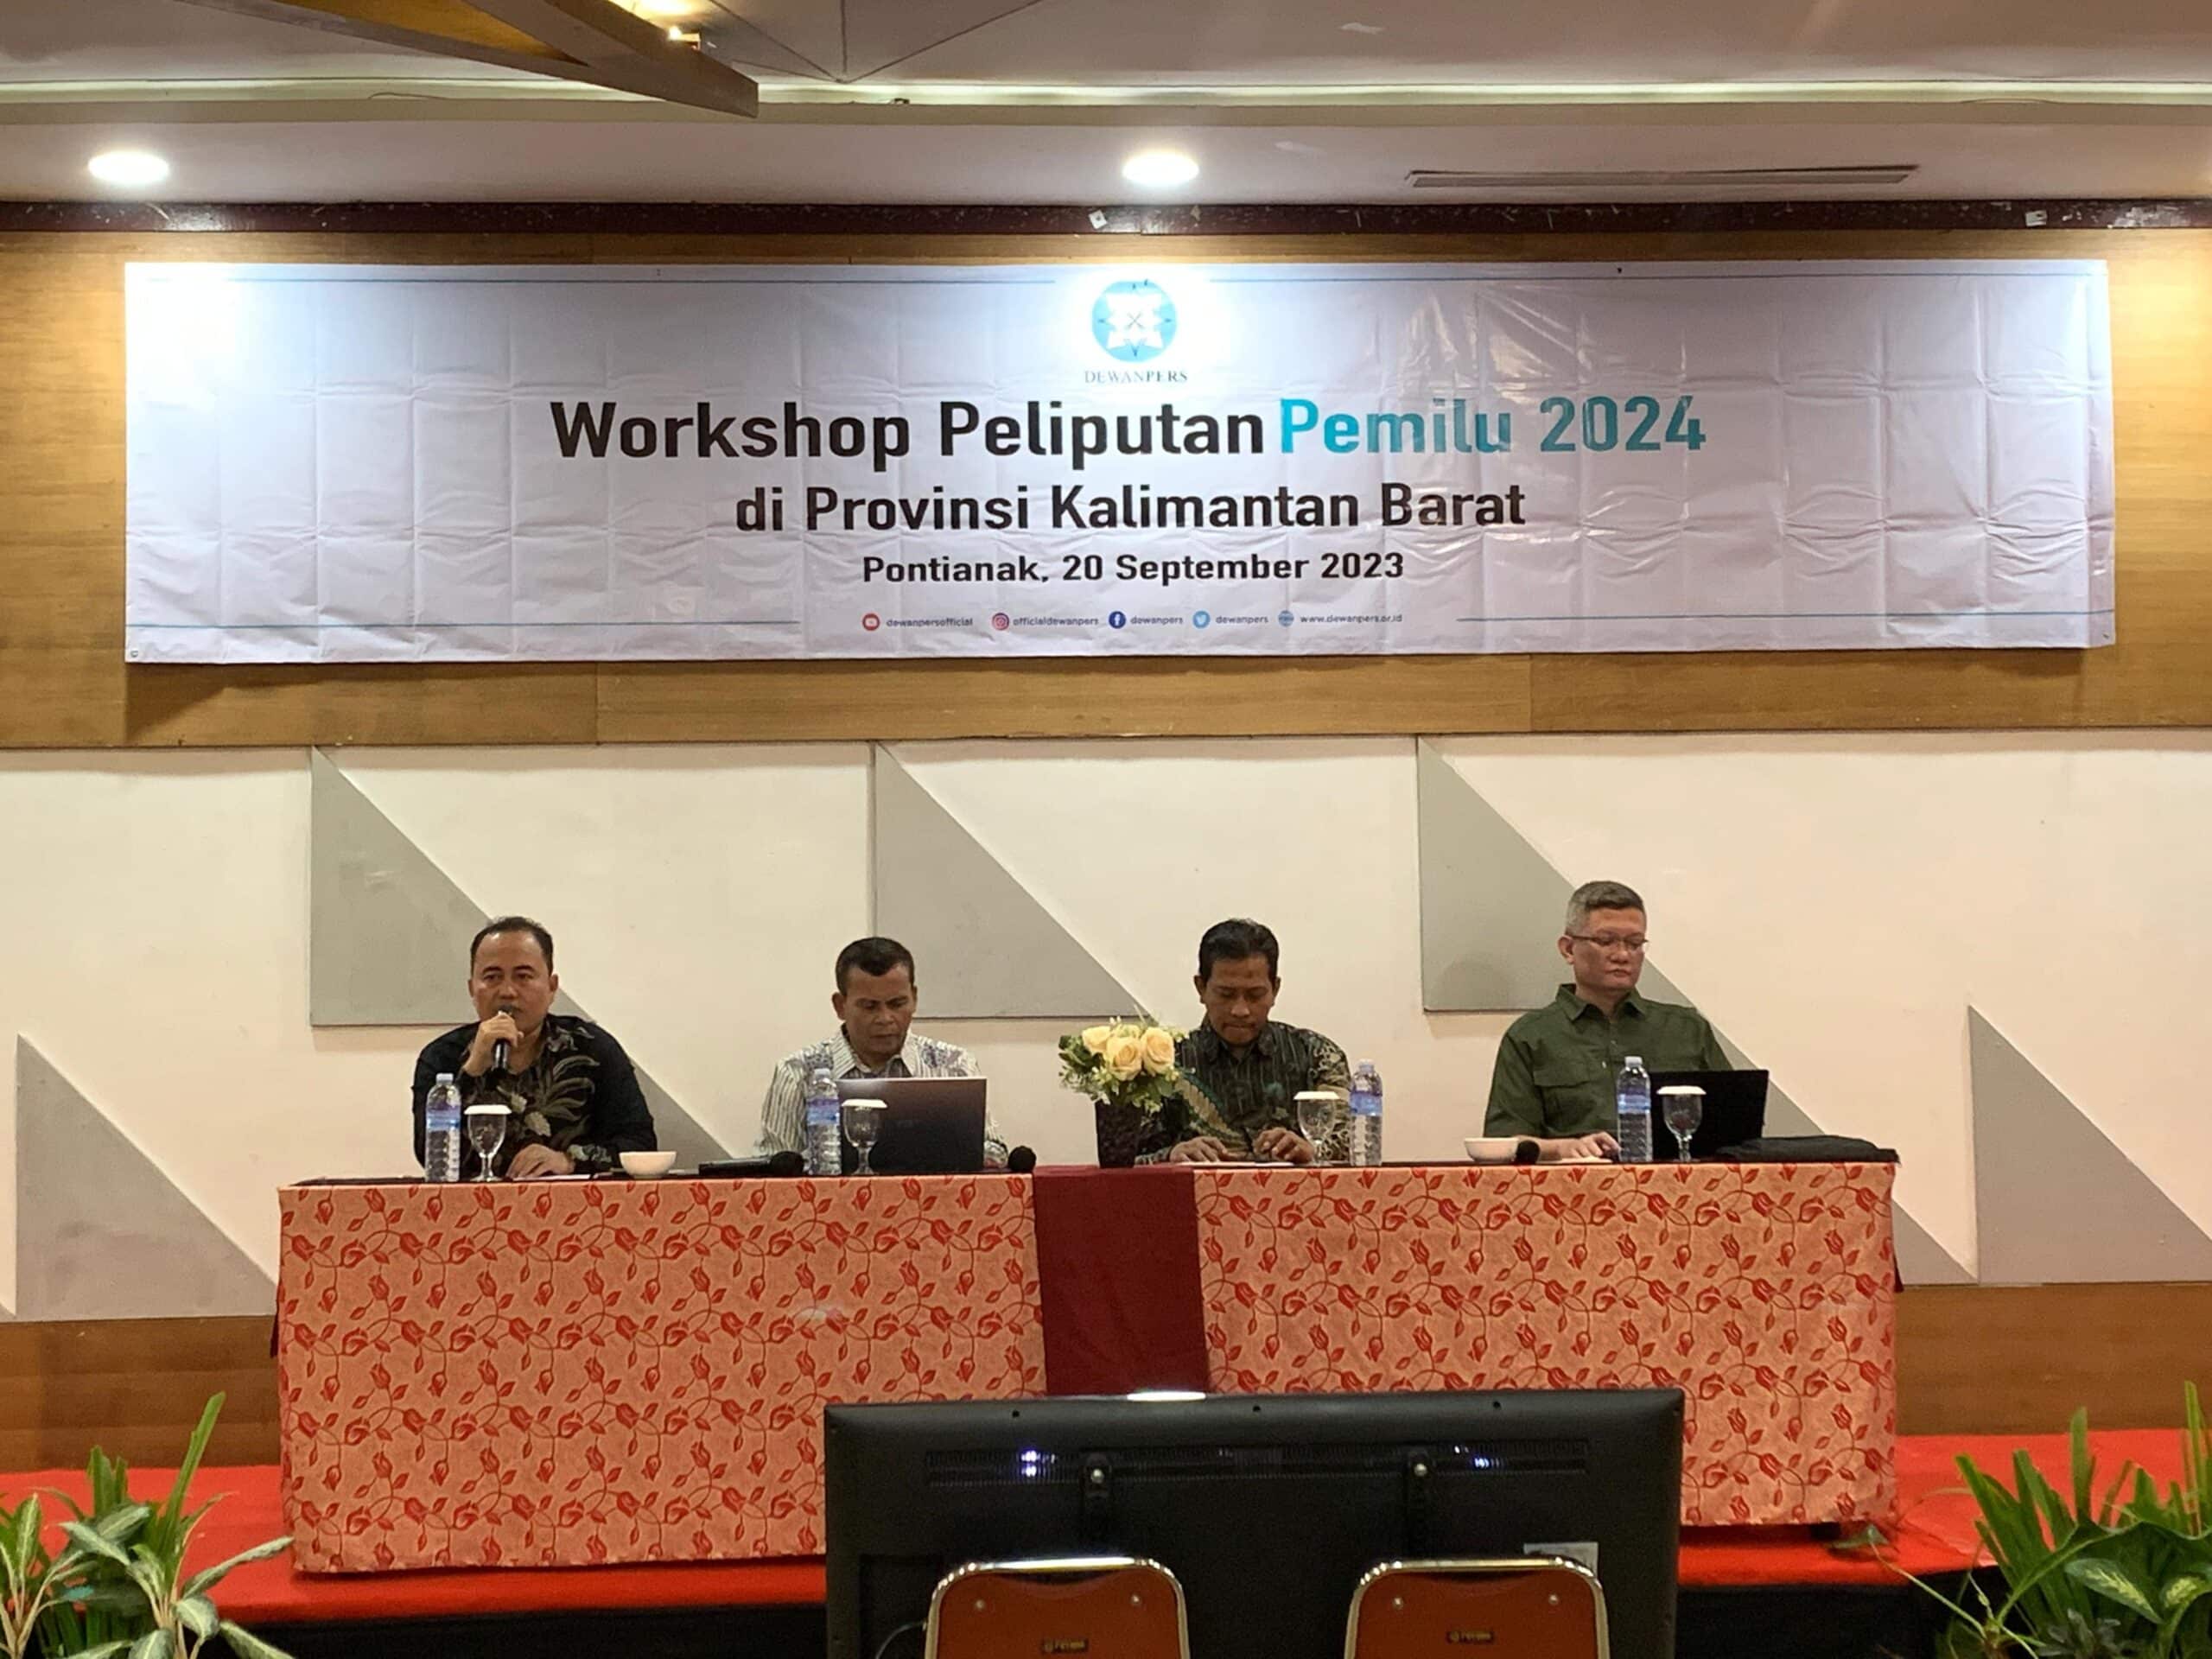 Workshop Peliputan Pemilu 2024 untuk media massa di Kalimantan Barat, Rabu (20/09/2023). (Foto: Indri)